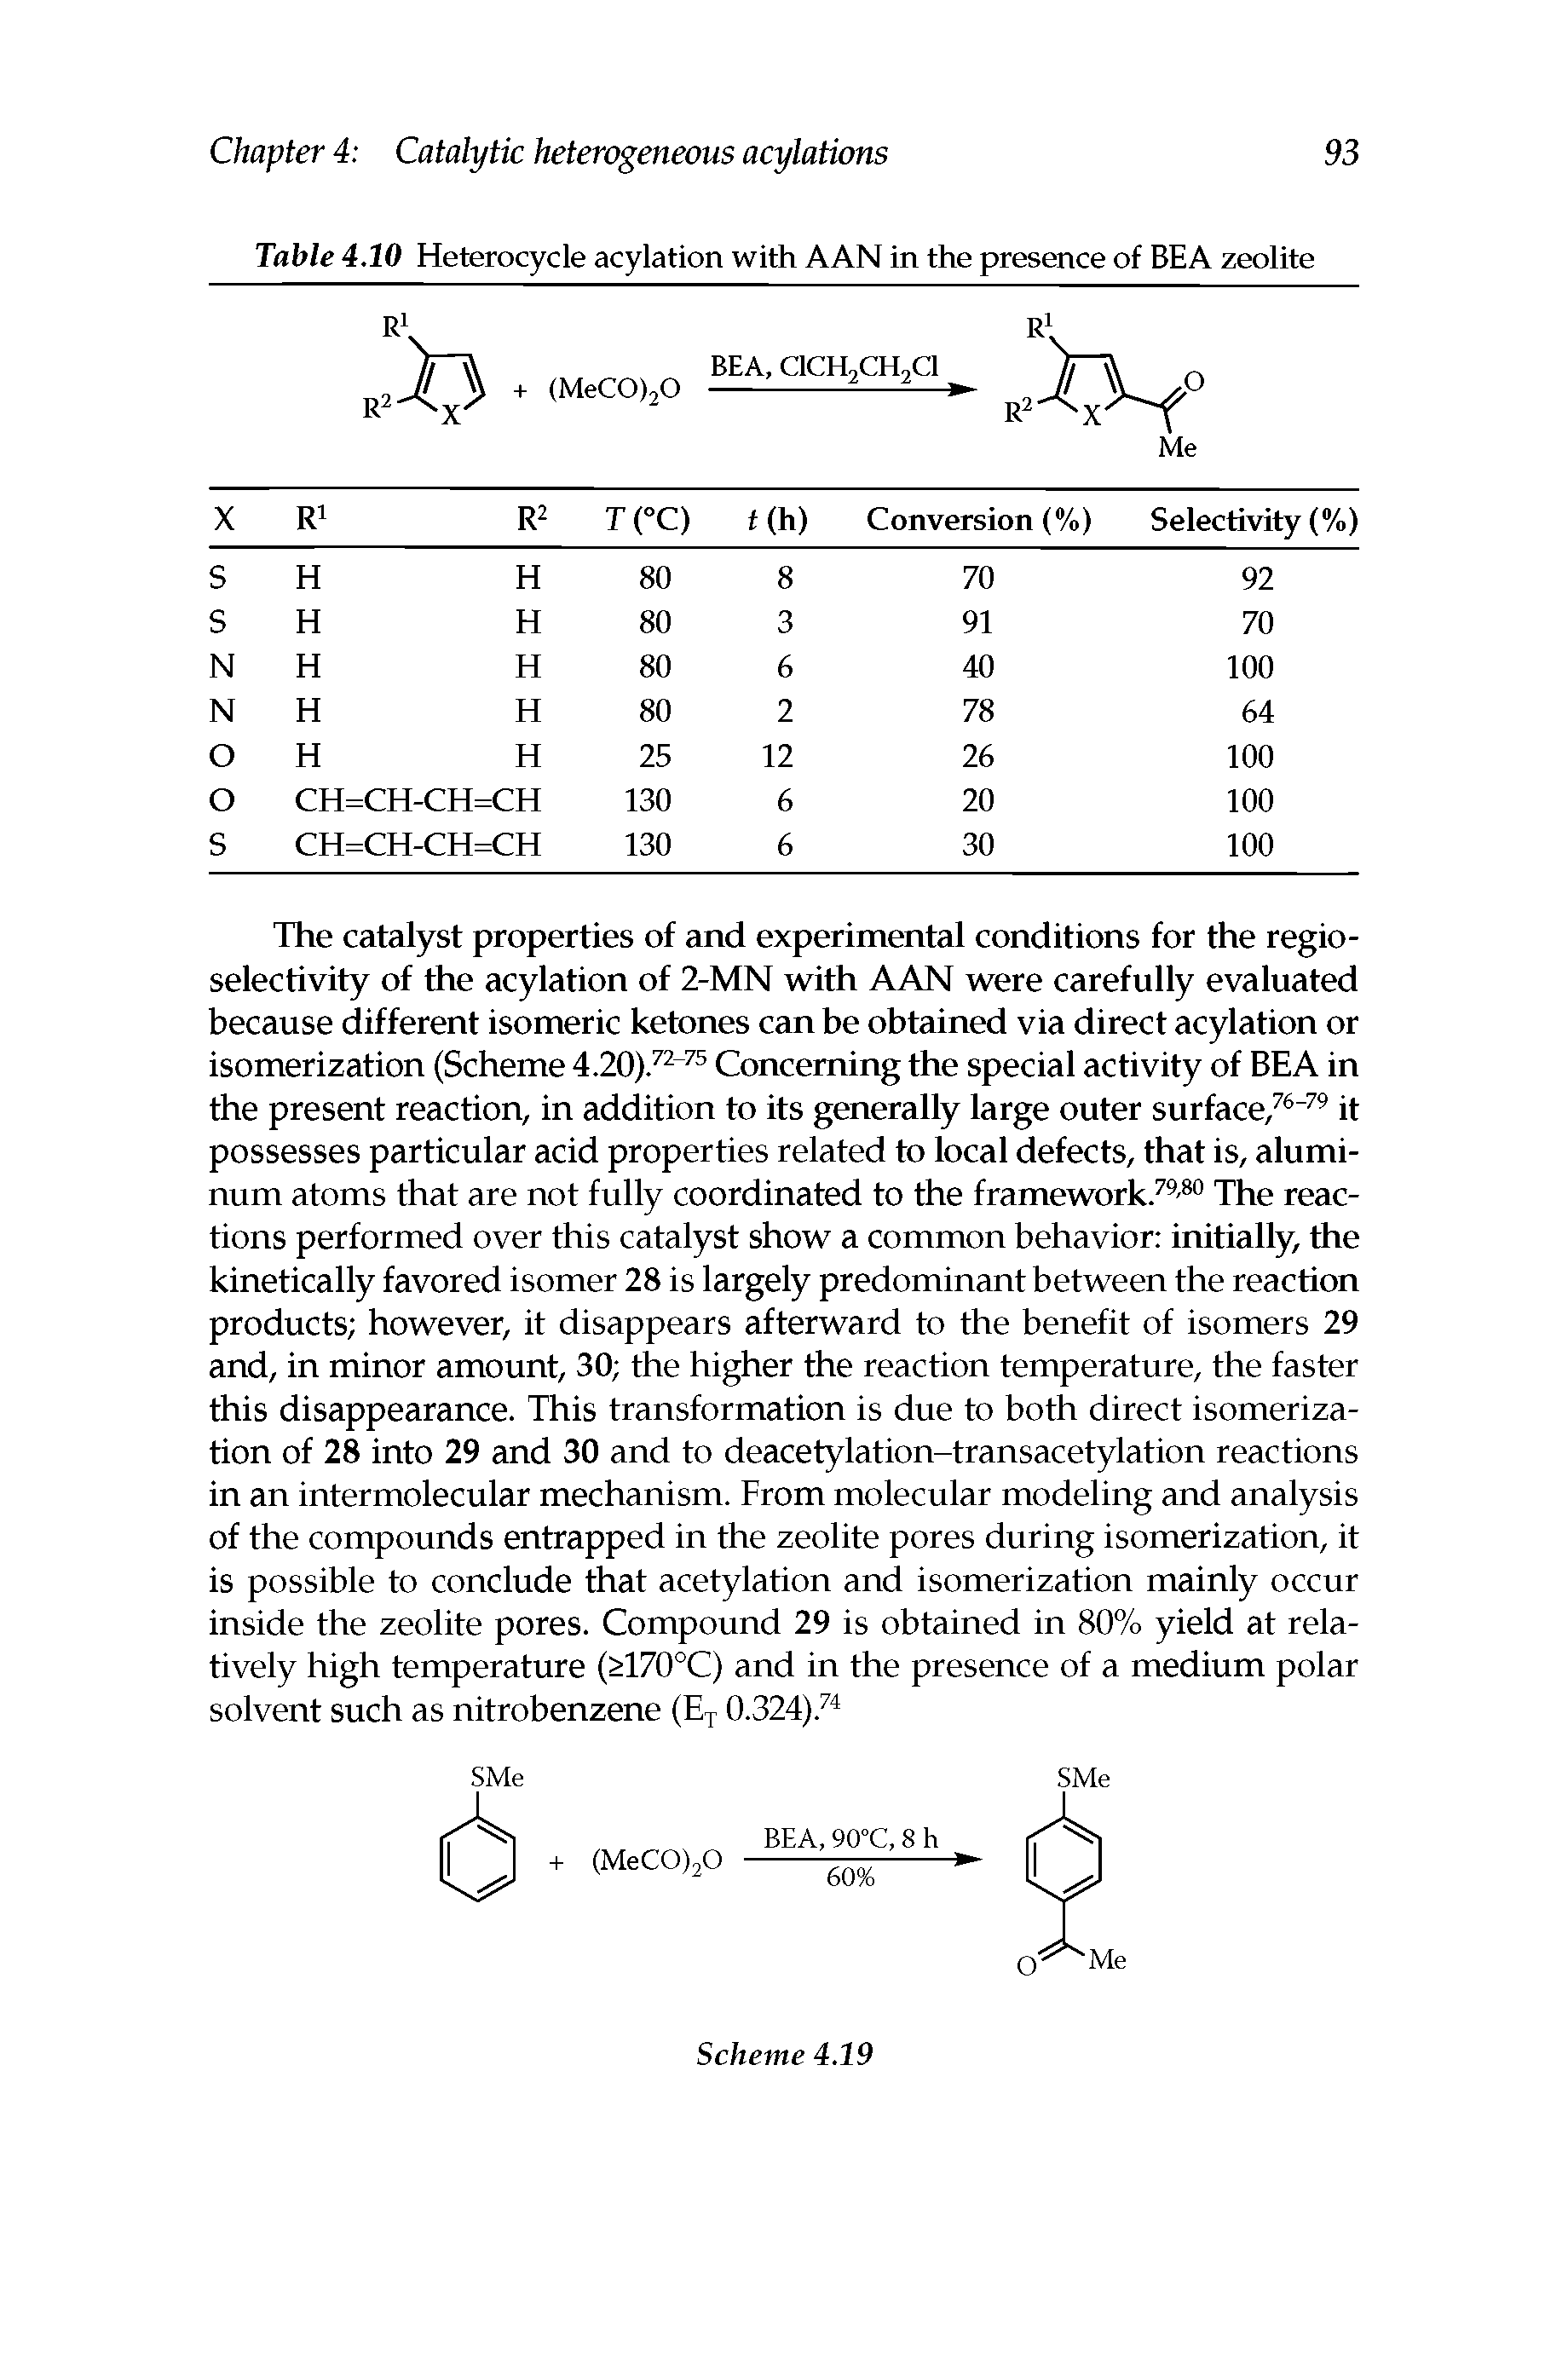 Table 4.10 Heterocycle acylation with AAN in the presence of BEA zeolite...